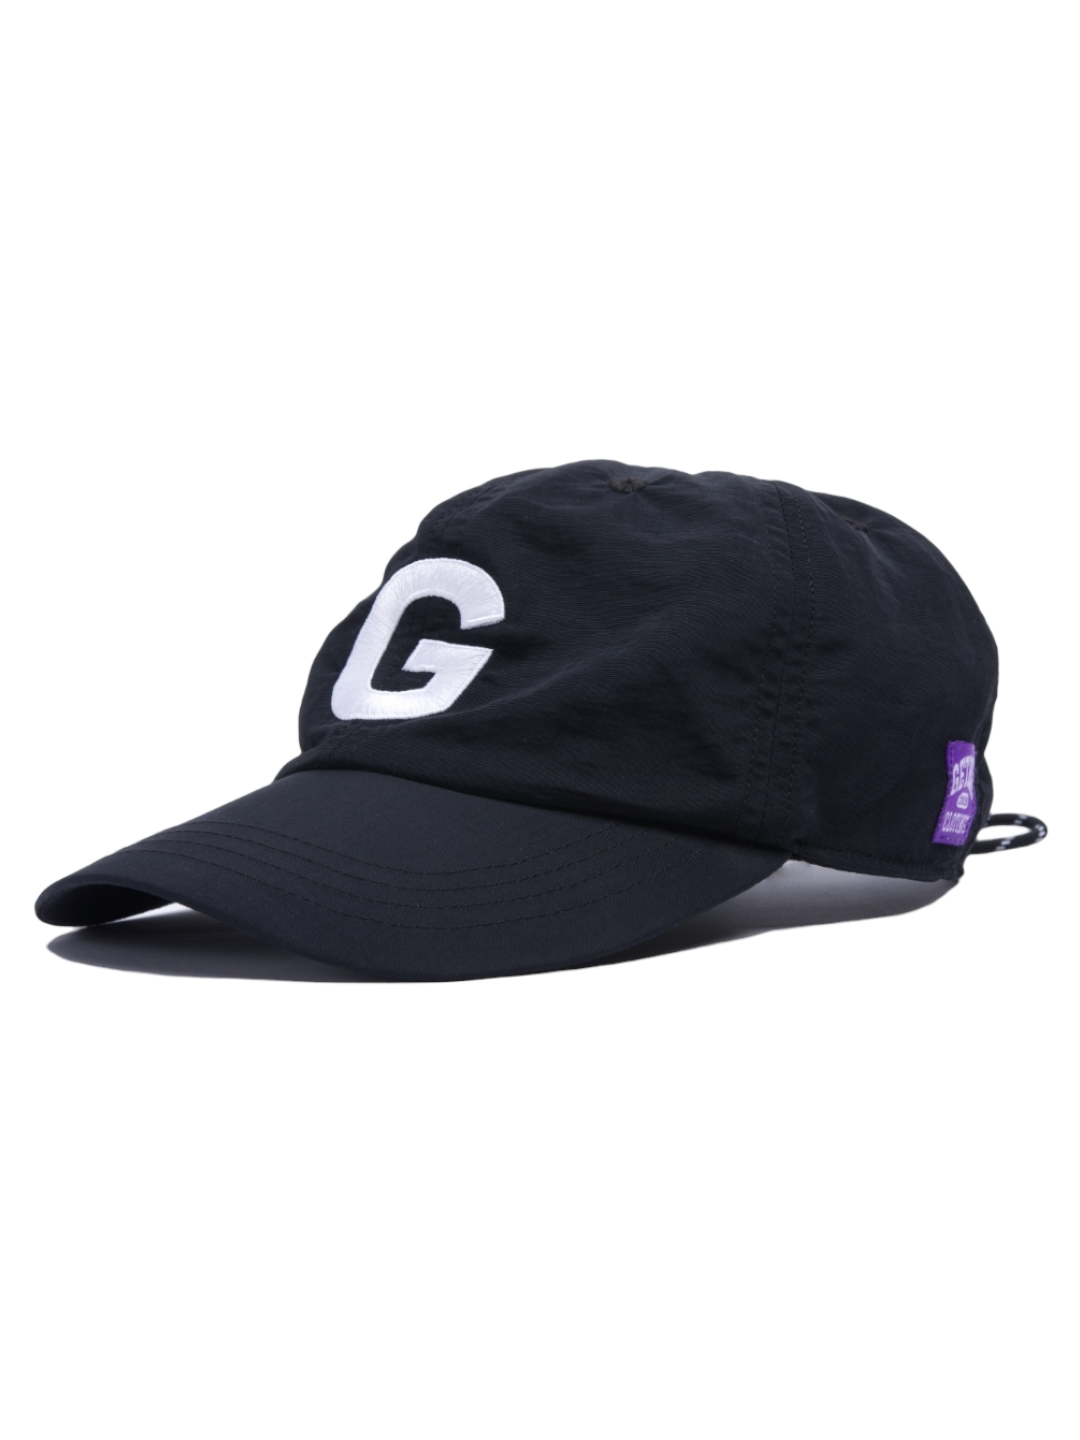 Original Getricheasy Cap (Black)